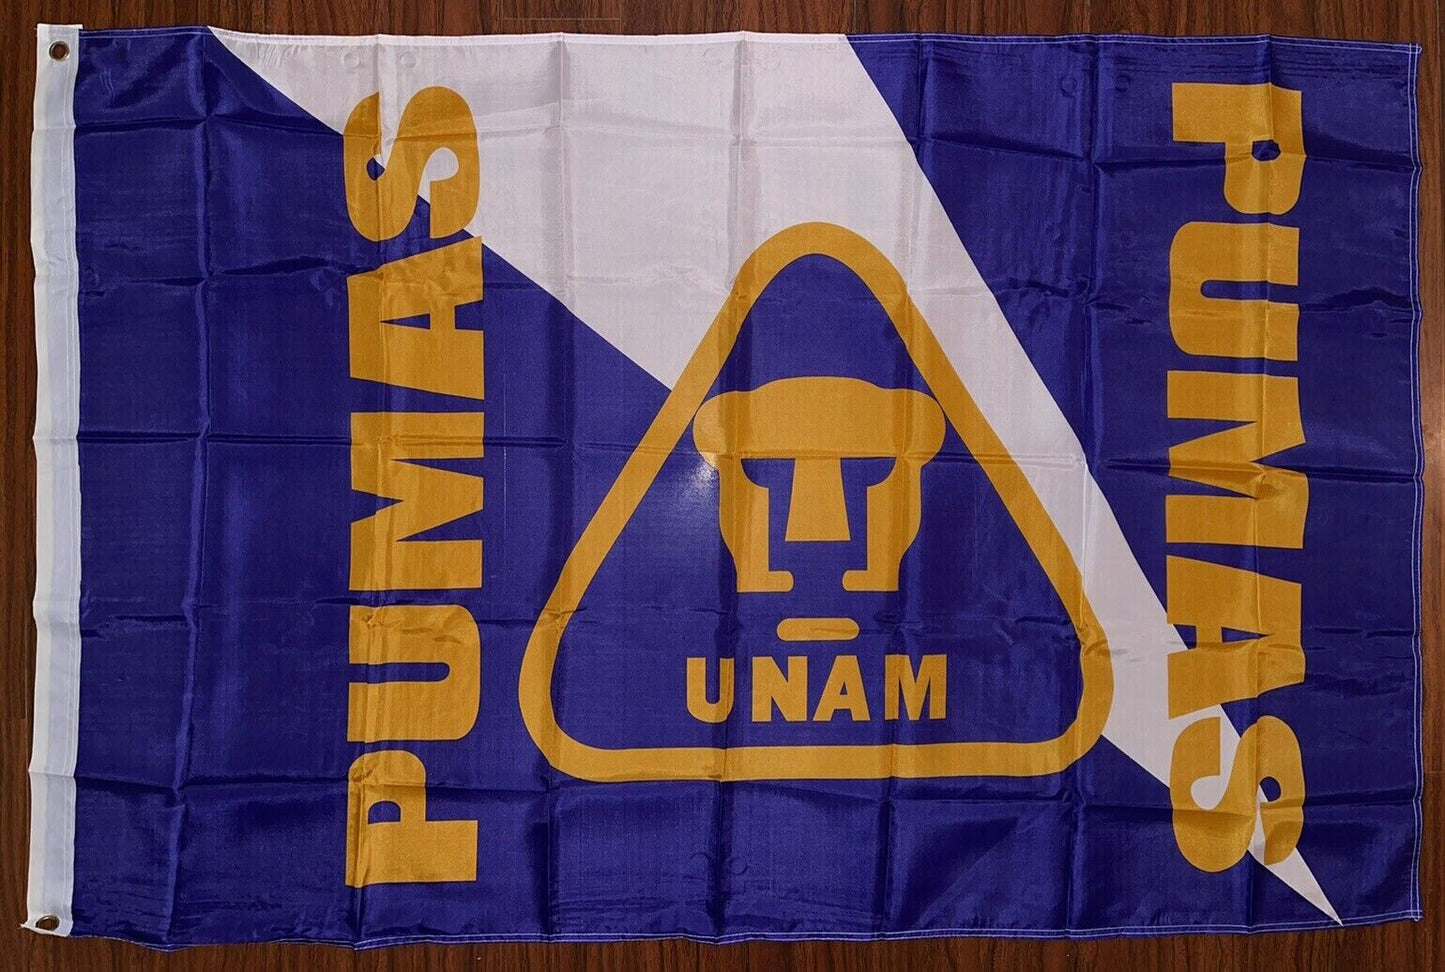 Pumas UNAM 3’ x 5’ Flag Banner Bandera Mexico Futbol Football Soccer